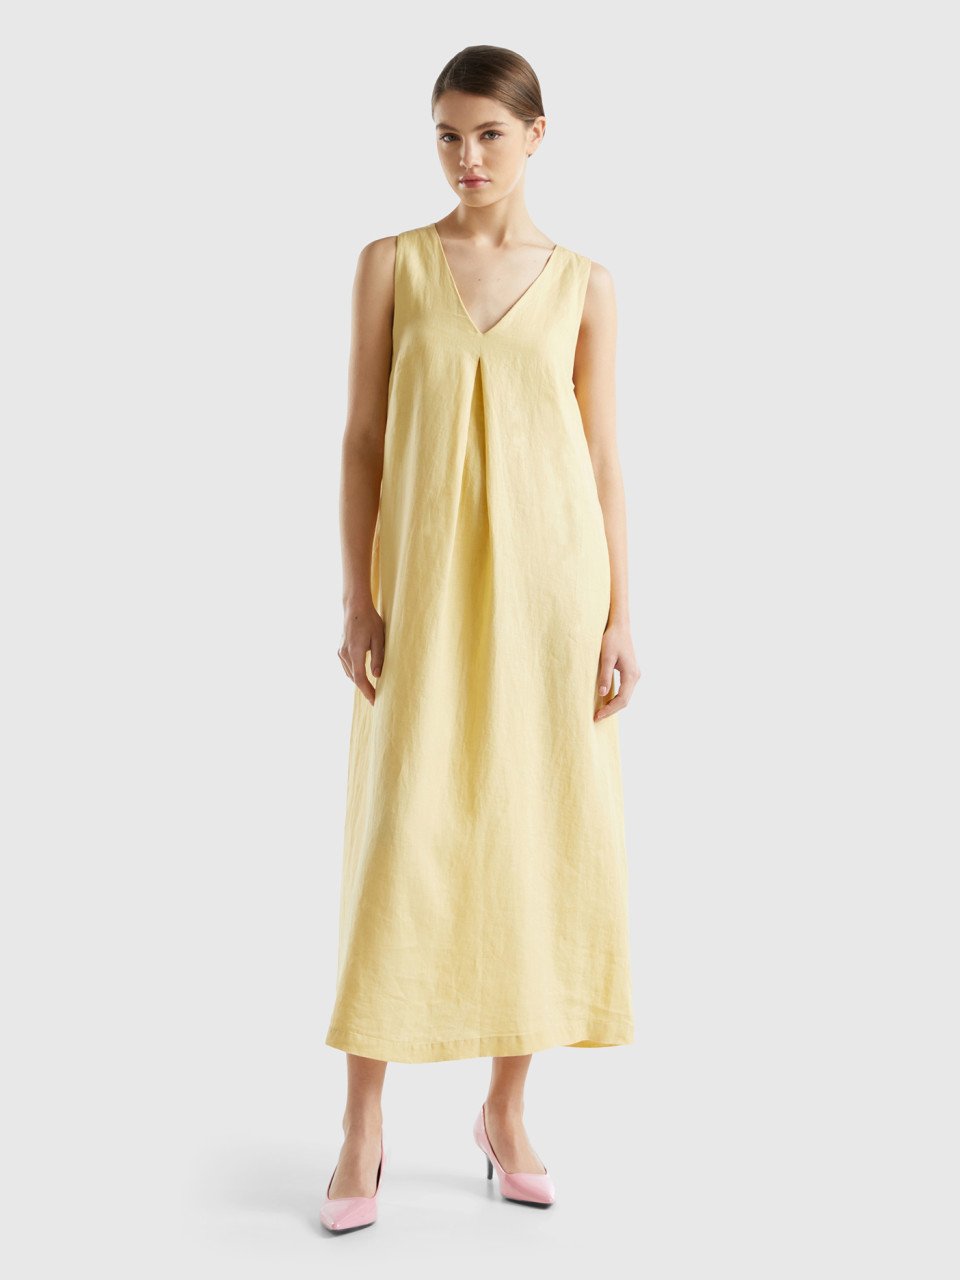 Benetton, Sleeveless Dress In Pure Linen, Yellow, Women